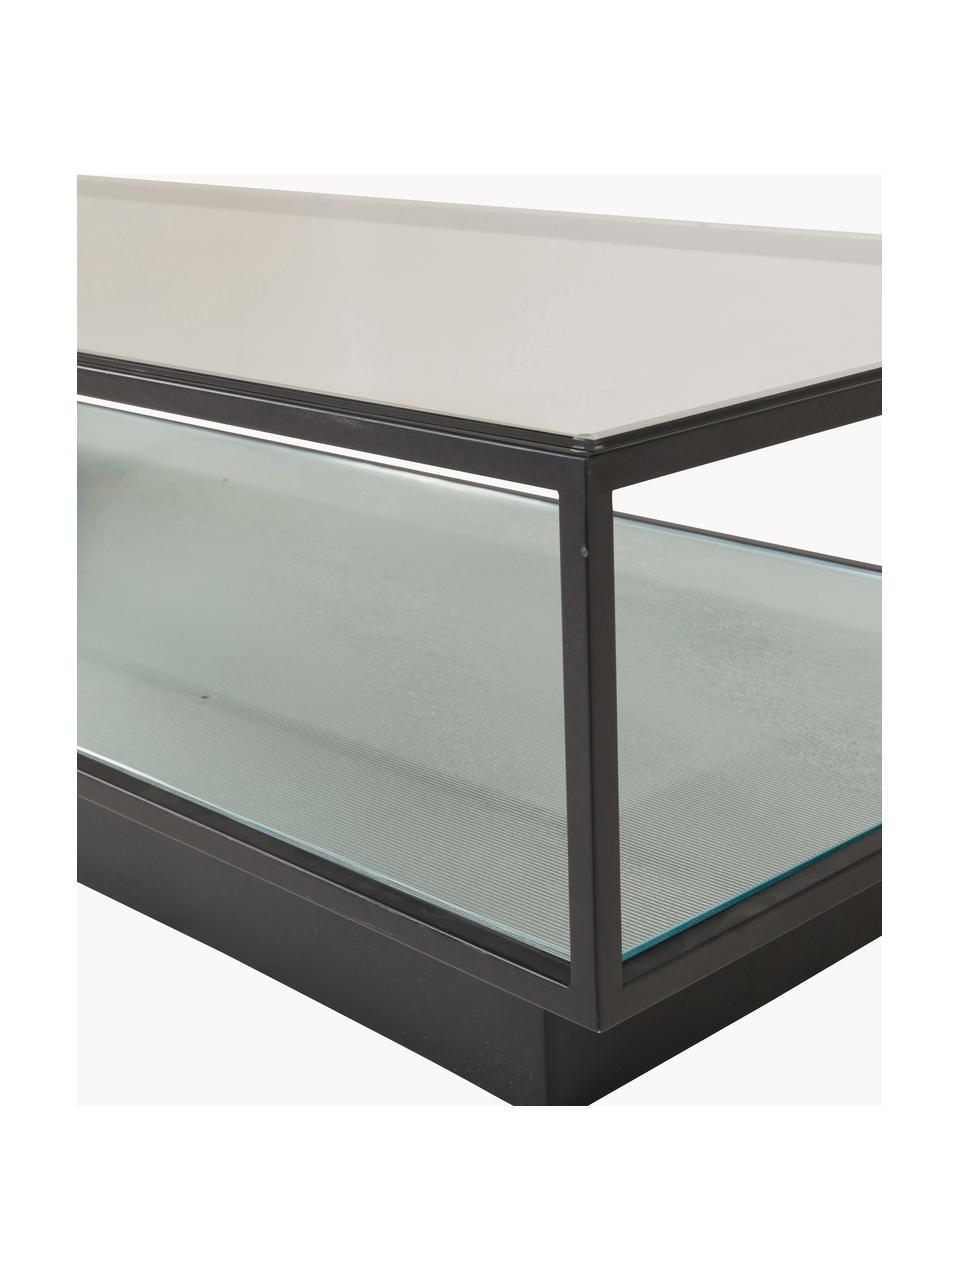 Metalen salontafel Maglehem met glazen tafelblad, Frame: gecoat metaal, Zwart, transparant, B 130 x H 60 cm